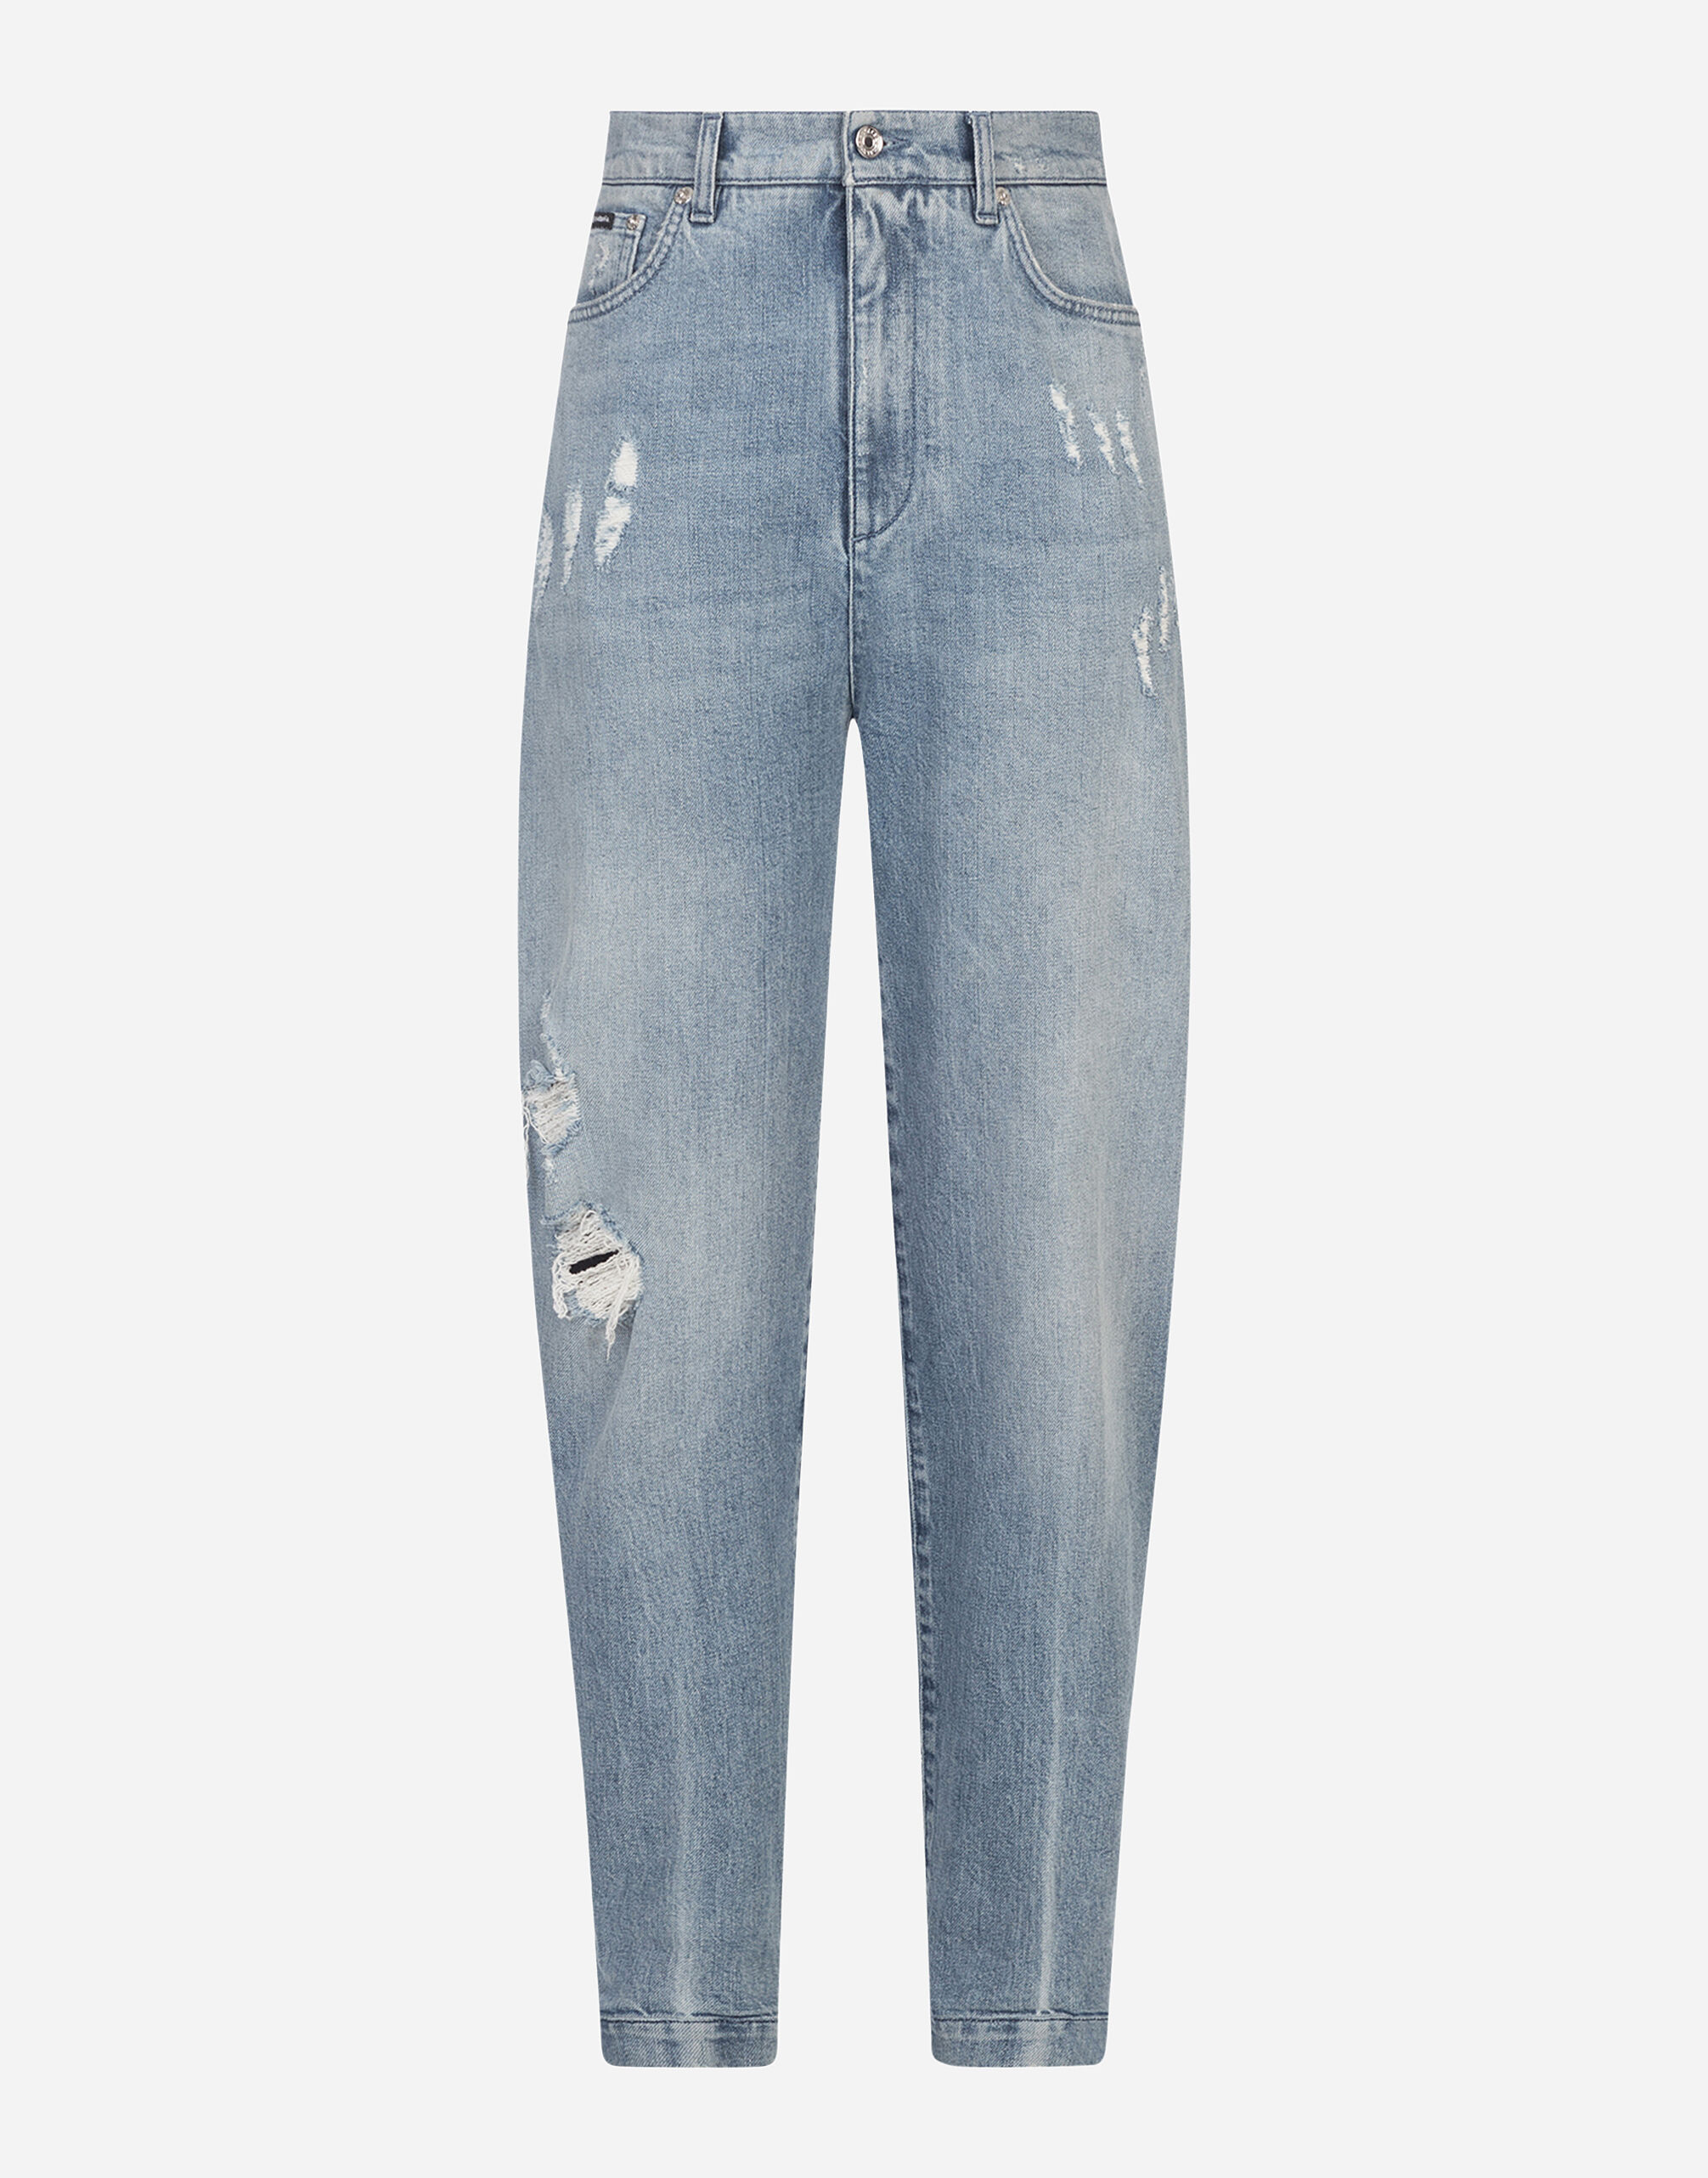 Dolce & Gabbana Boyfriend jeans in light blue denim with rips Blue FTBYLDG8CT4